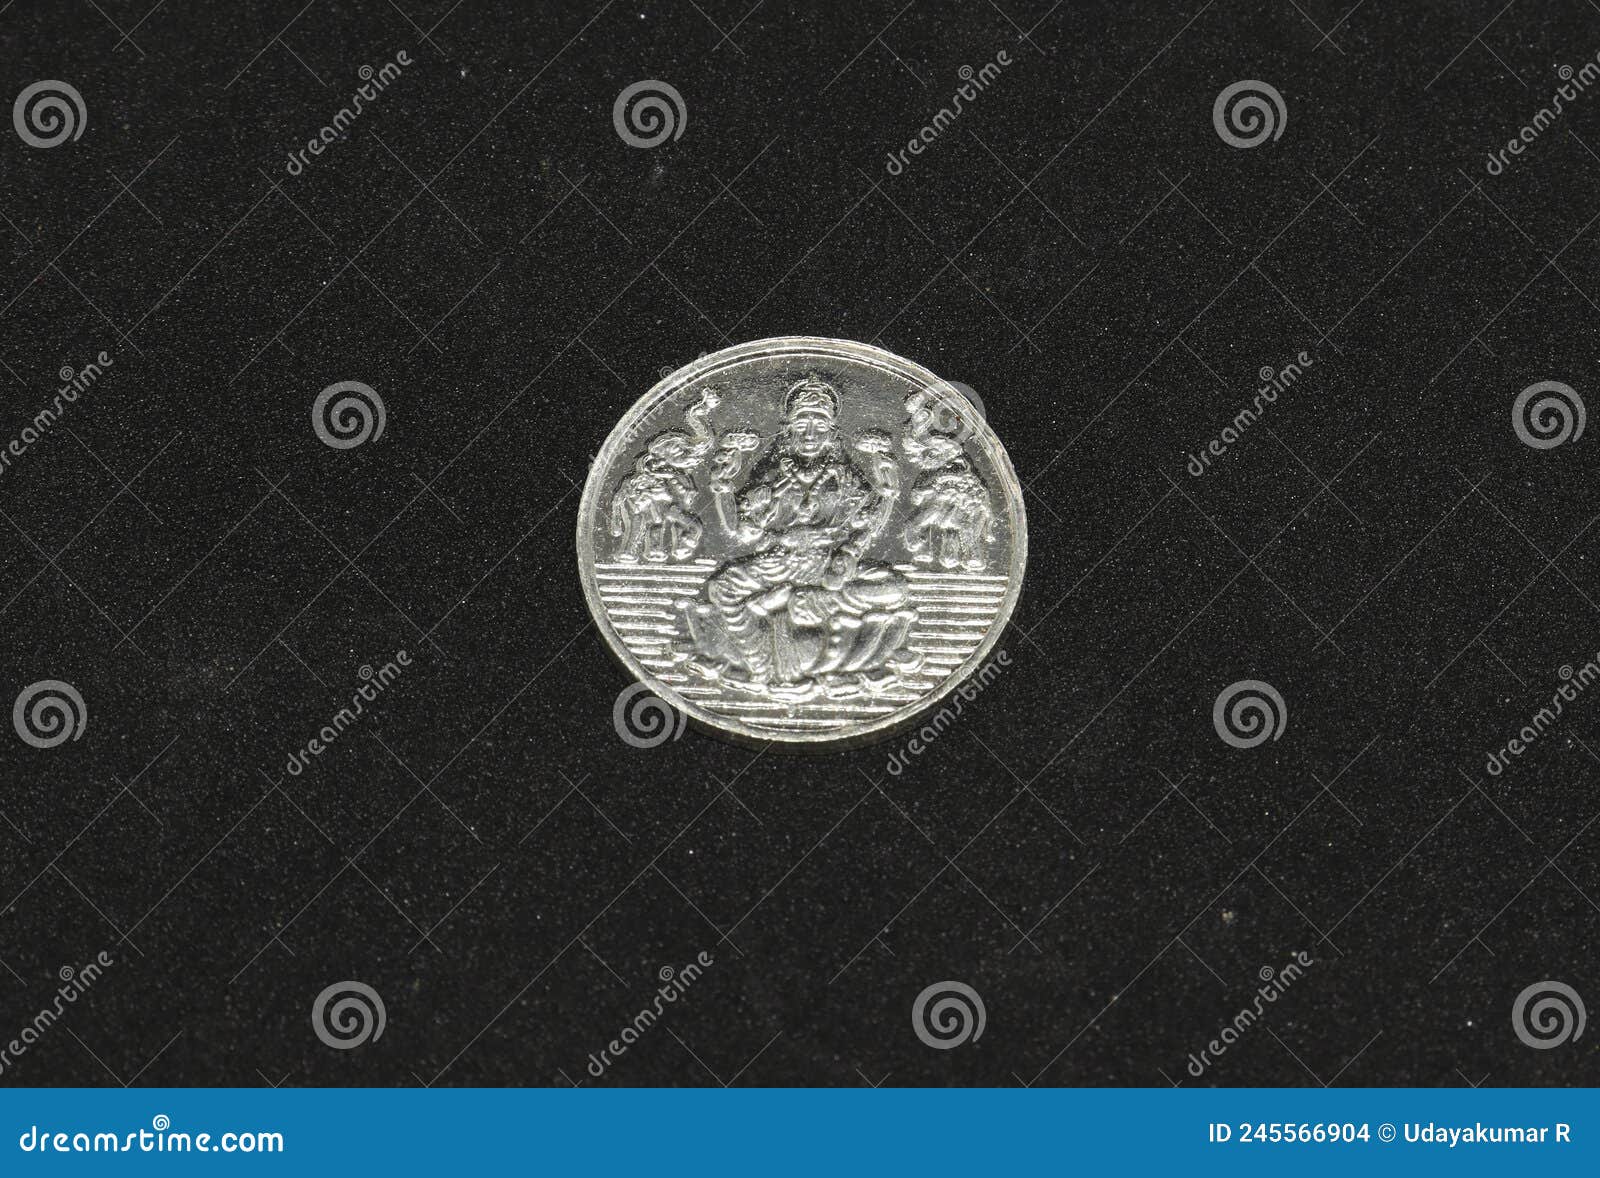 silver metal lakshmi coin.